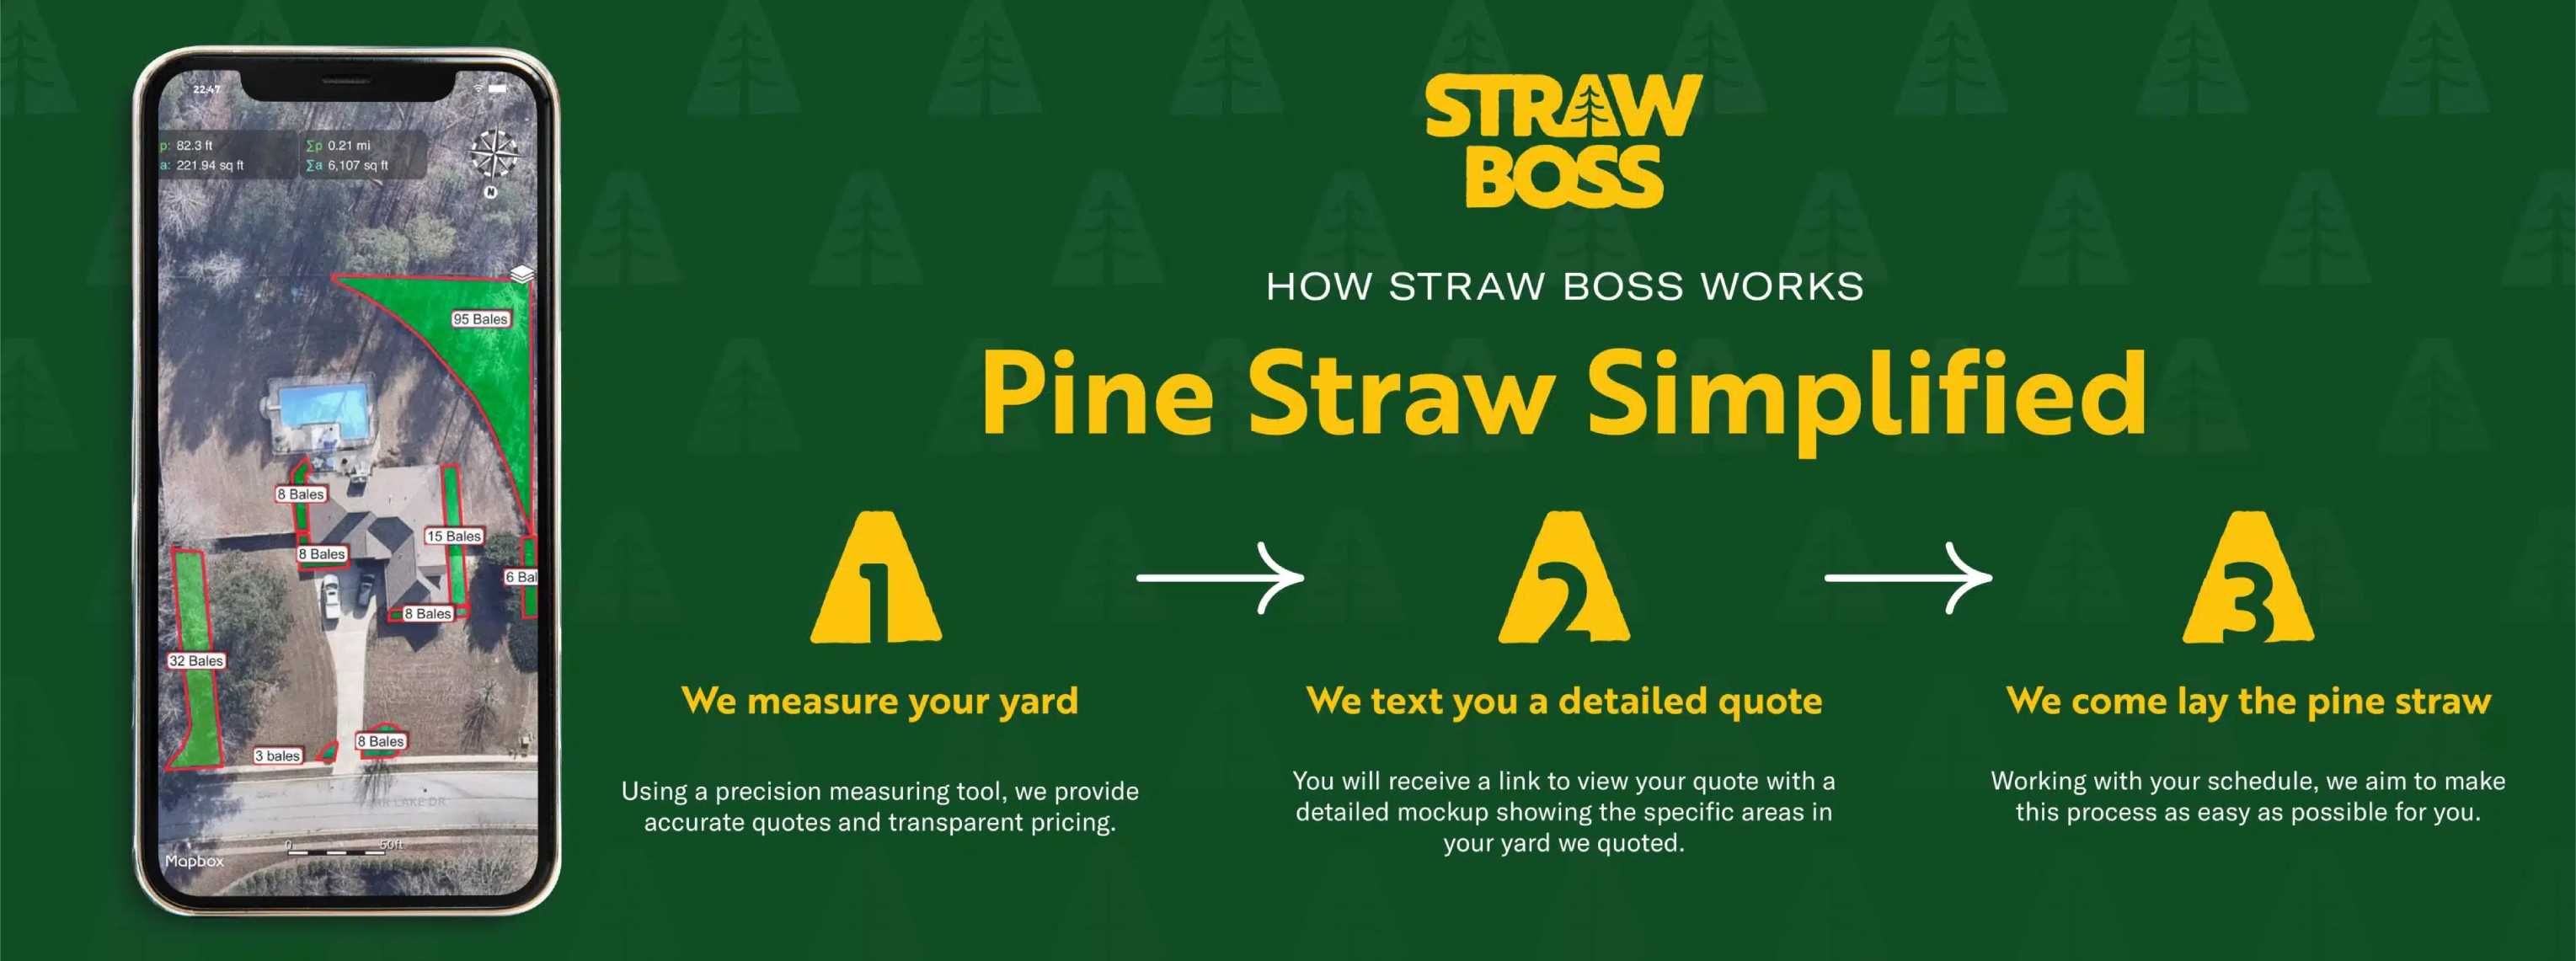 Straw Boss Work Process